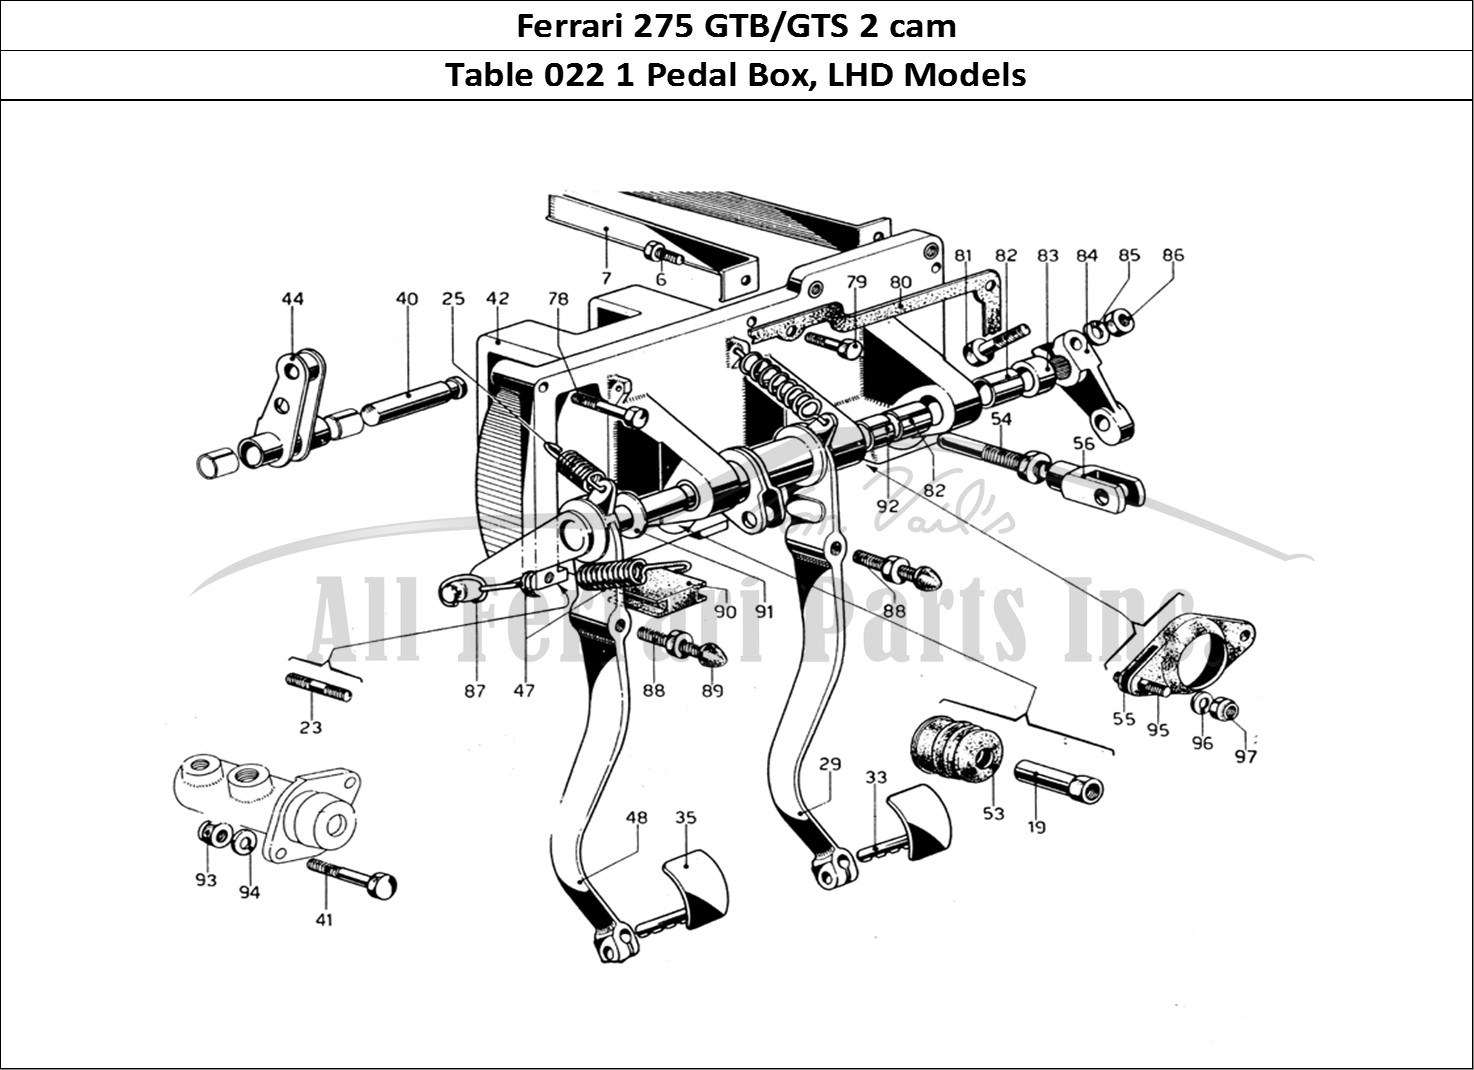 Ferrari Parts Ferrari 275 GTB/GTS 2 cam Page 022 Pedal Box - Left Hand Dri